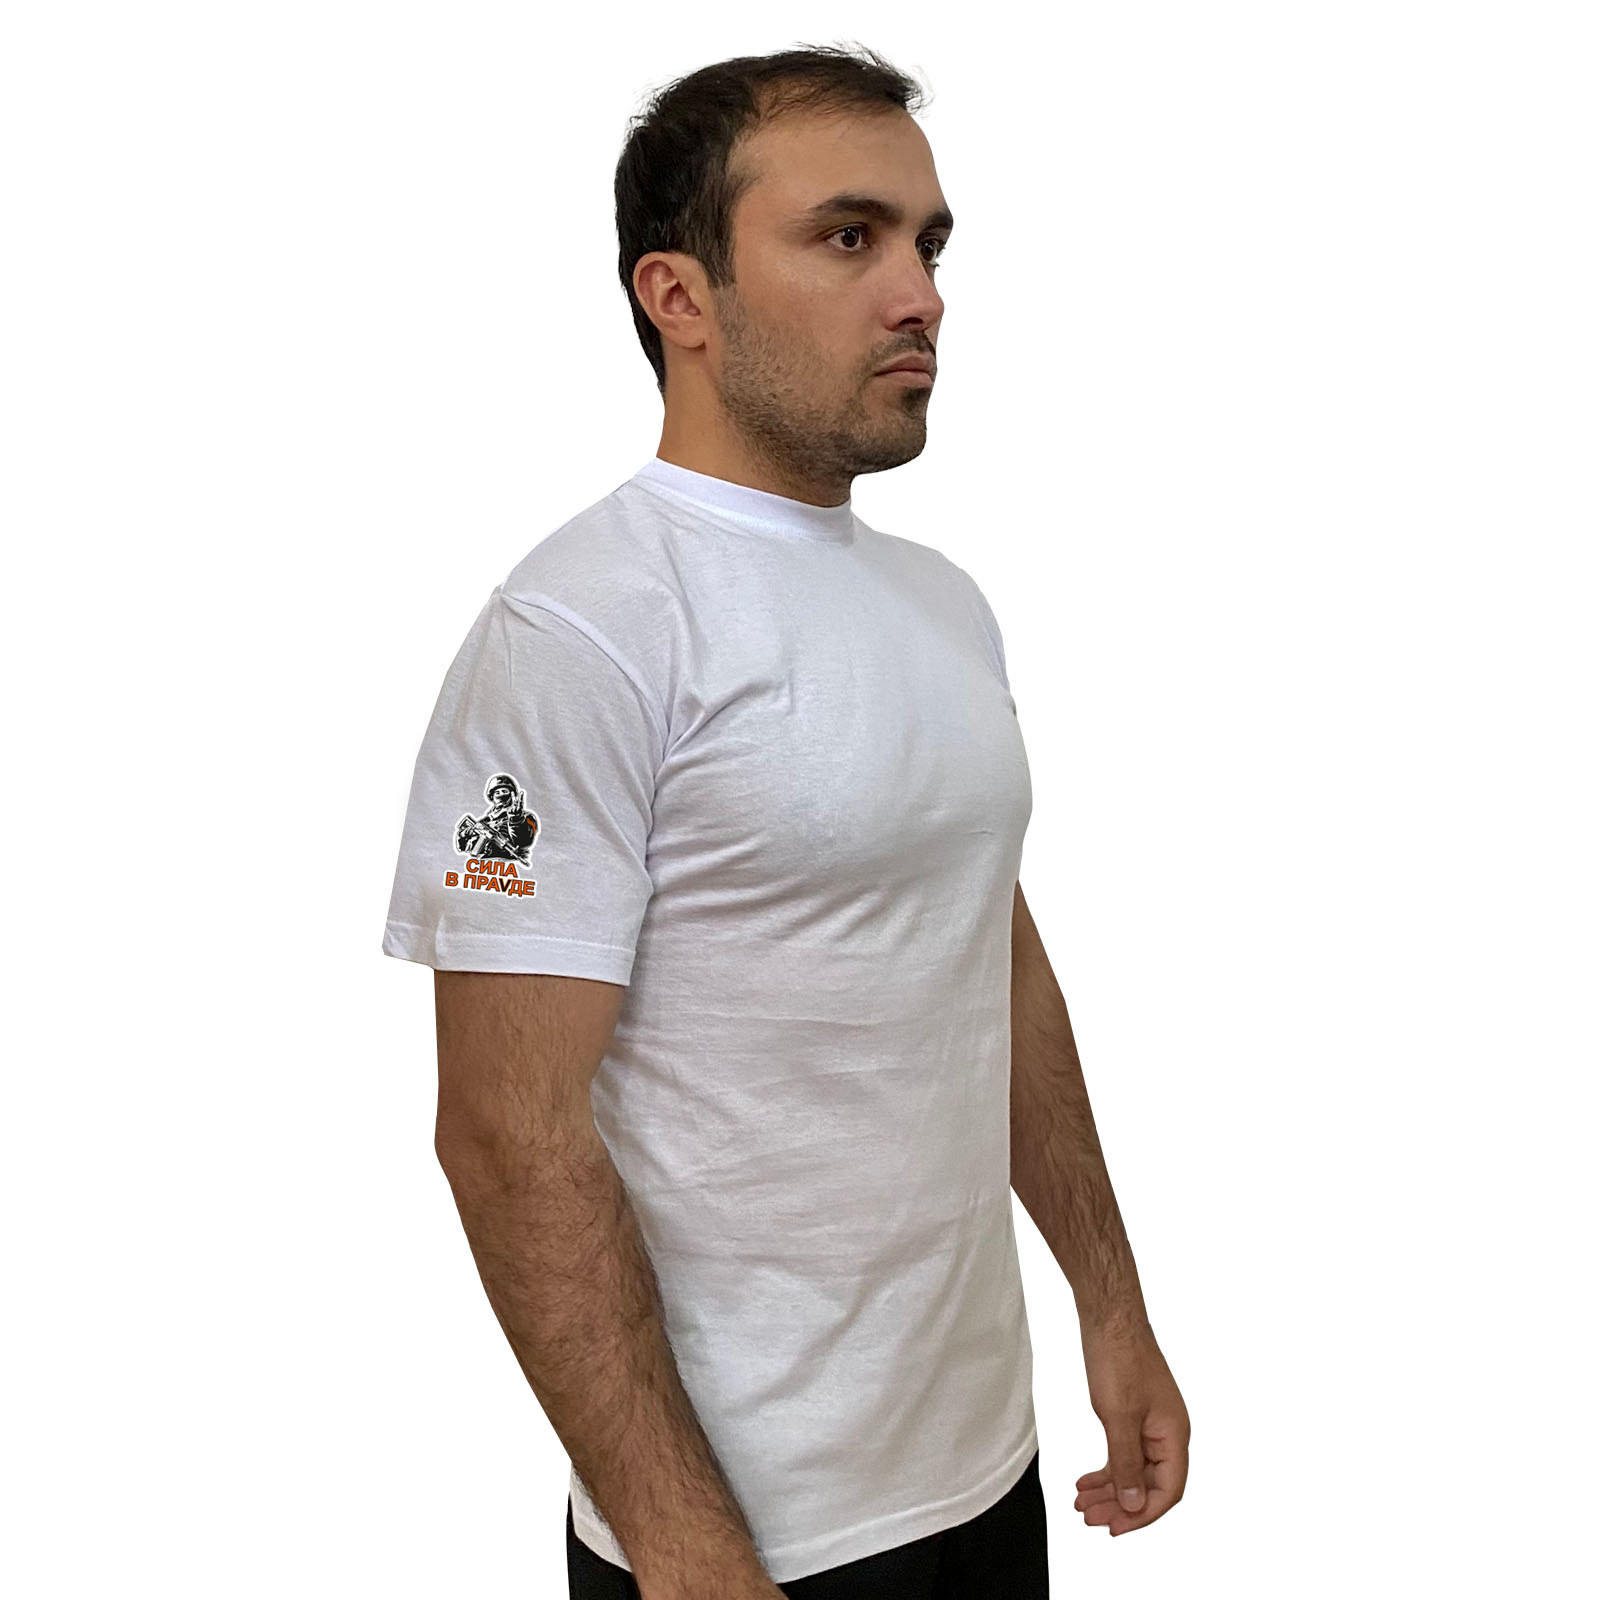 Белая футболка с термопринтом "Сила в праVде" на рукаве